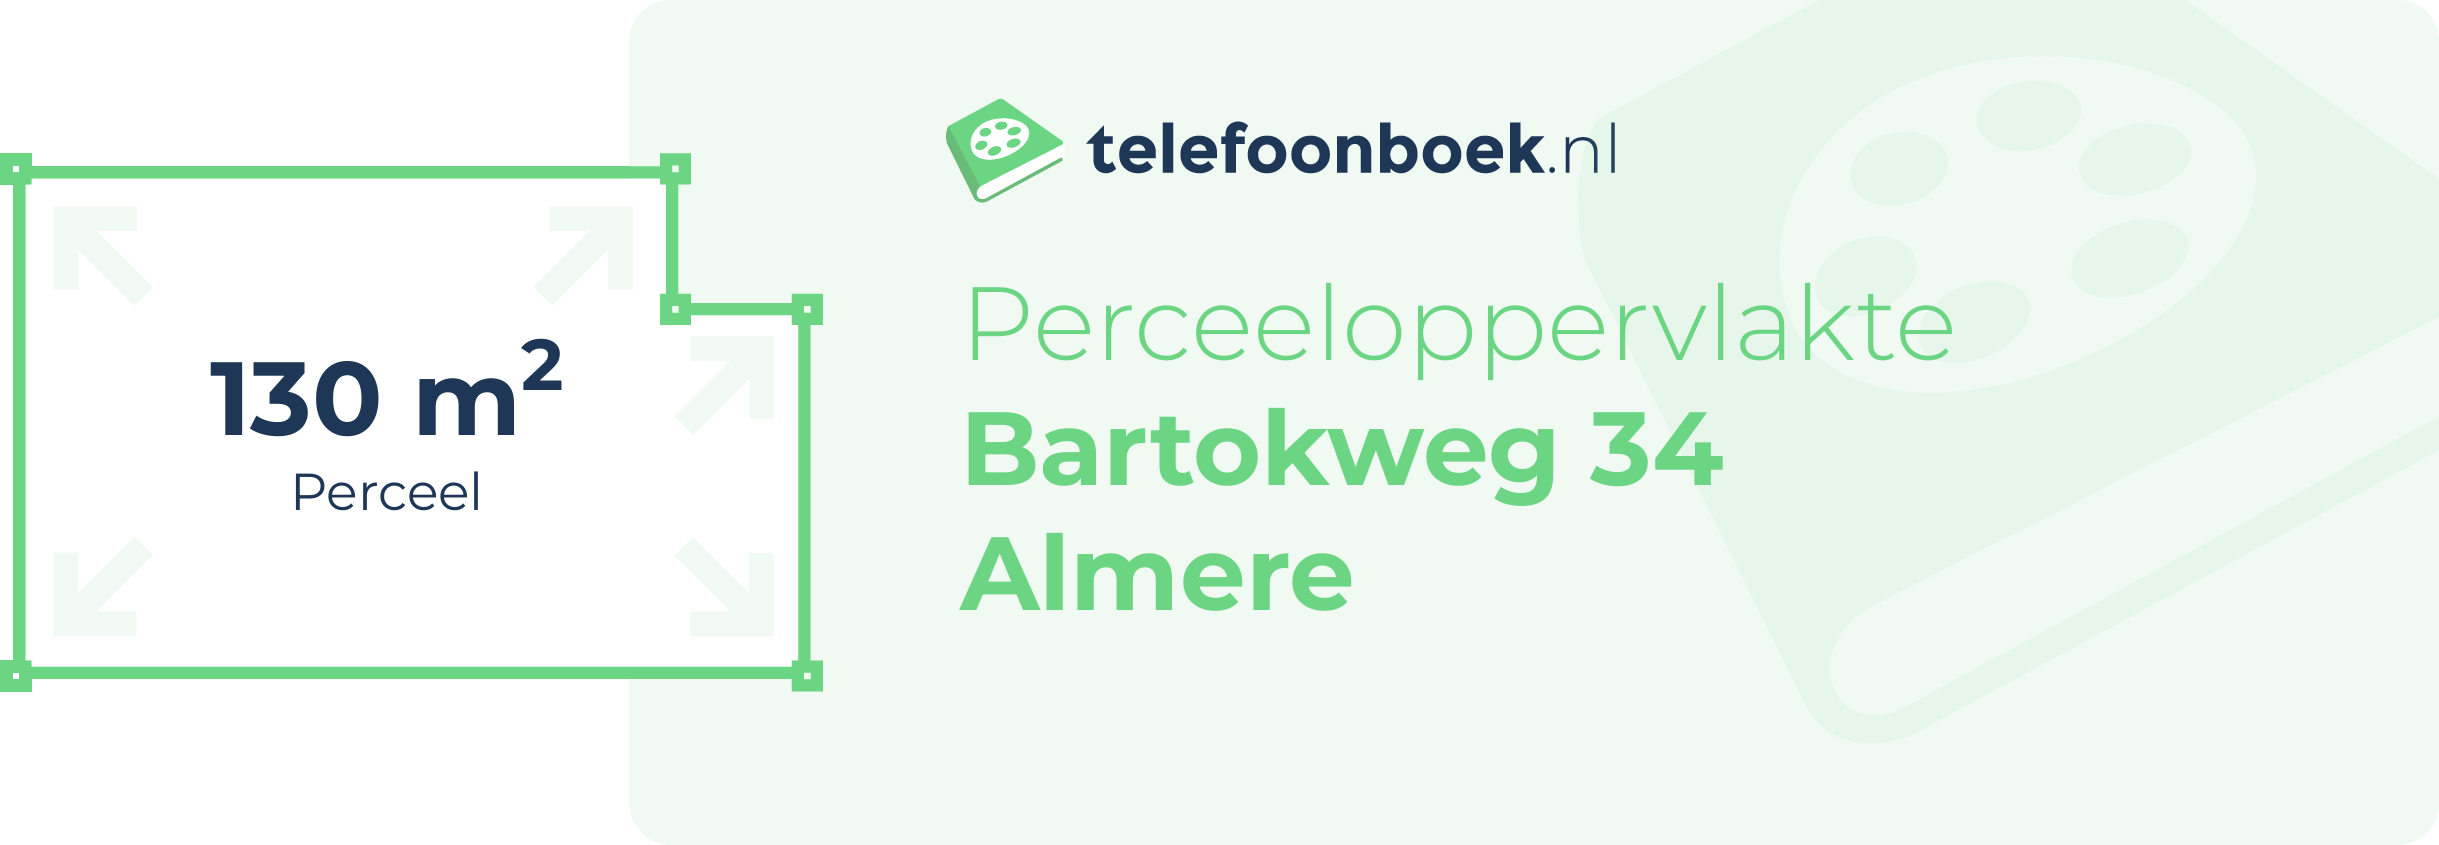 Perceeloppervlakte Bartokweg 34 Almere